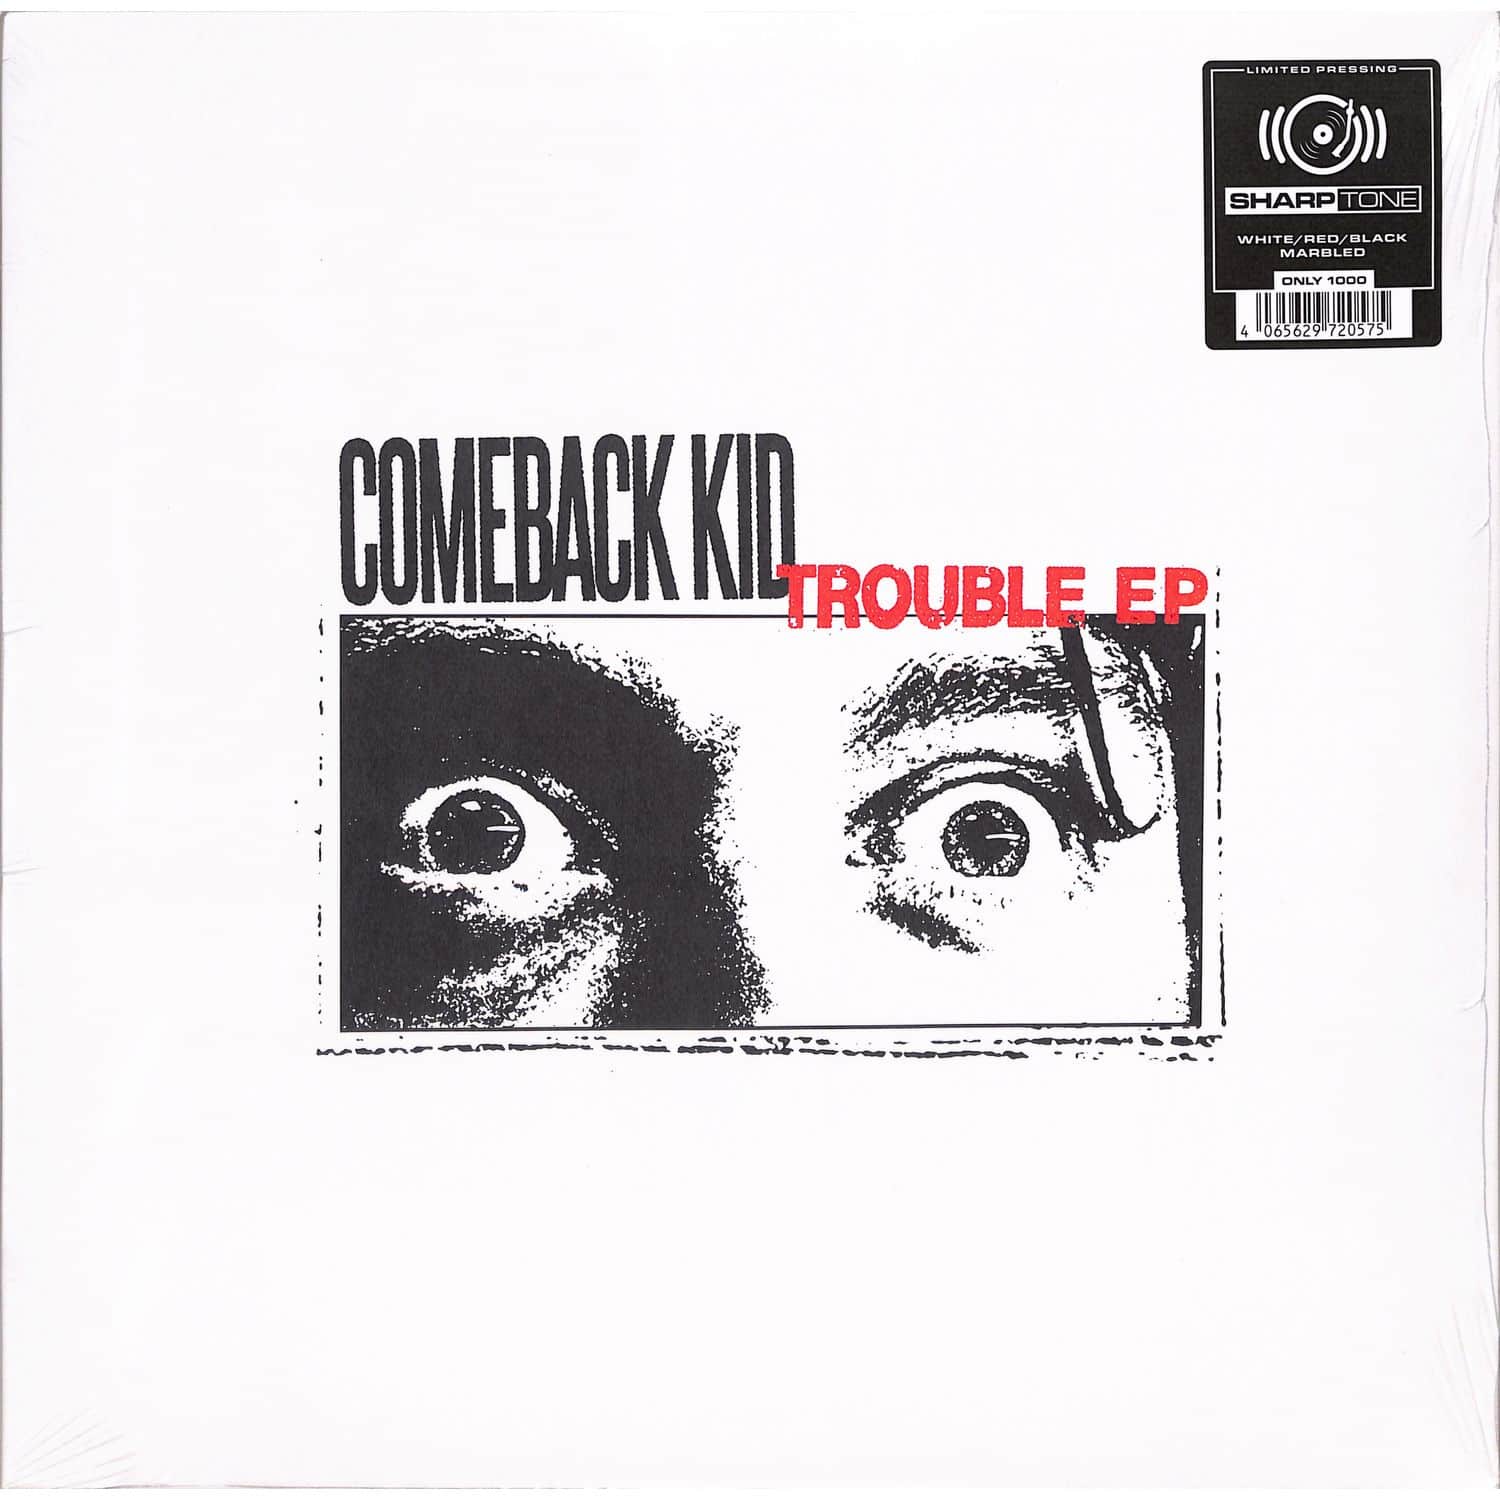 Comeback Kid - TROUBLE